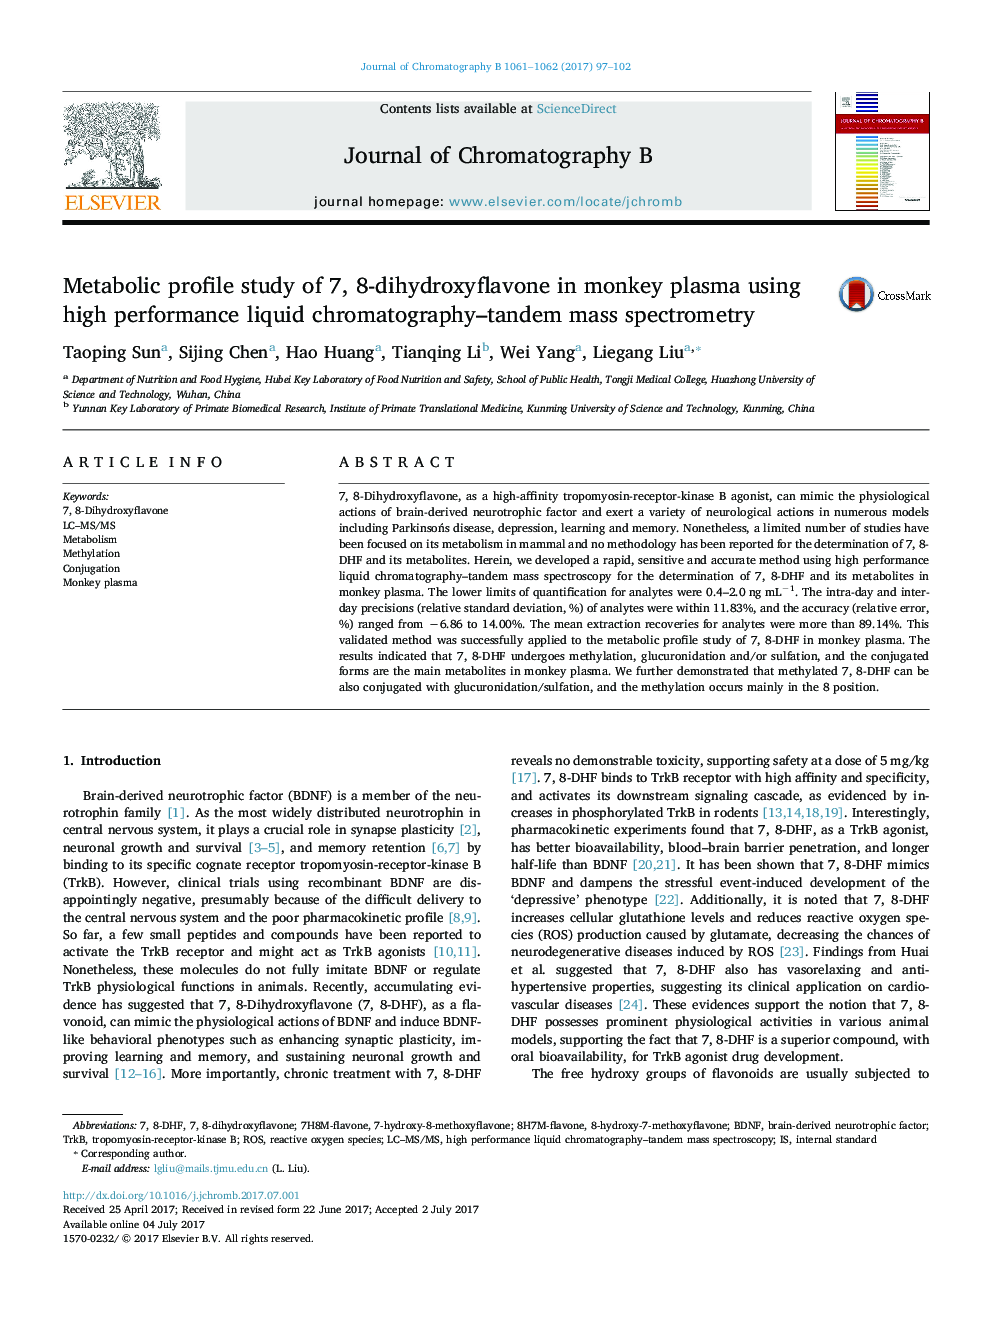 Metabolic profile study of 7, 8-dihydroxyflavone in monkey plasma using high performance liquid chromatography-tandem mass spectrometry